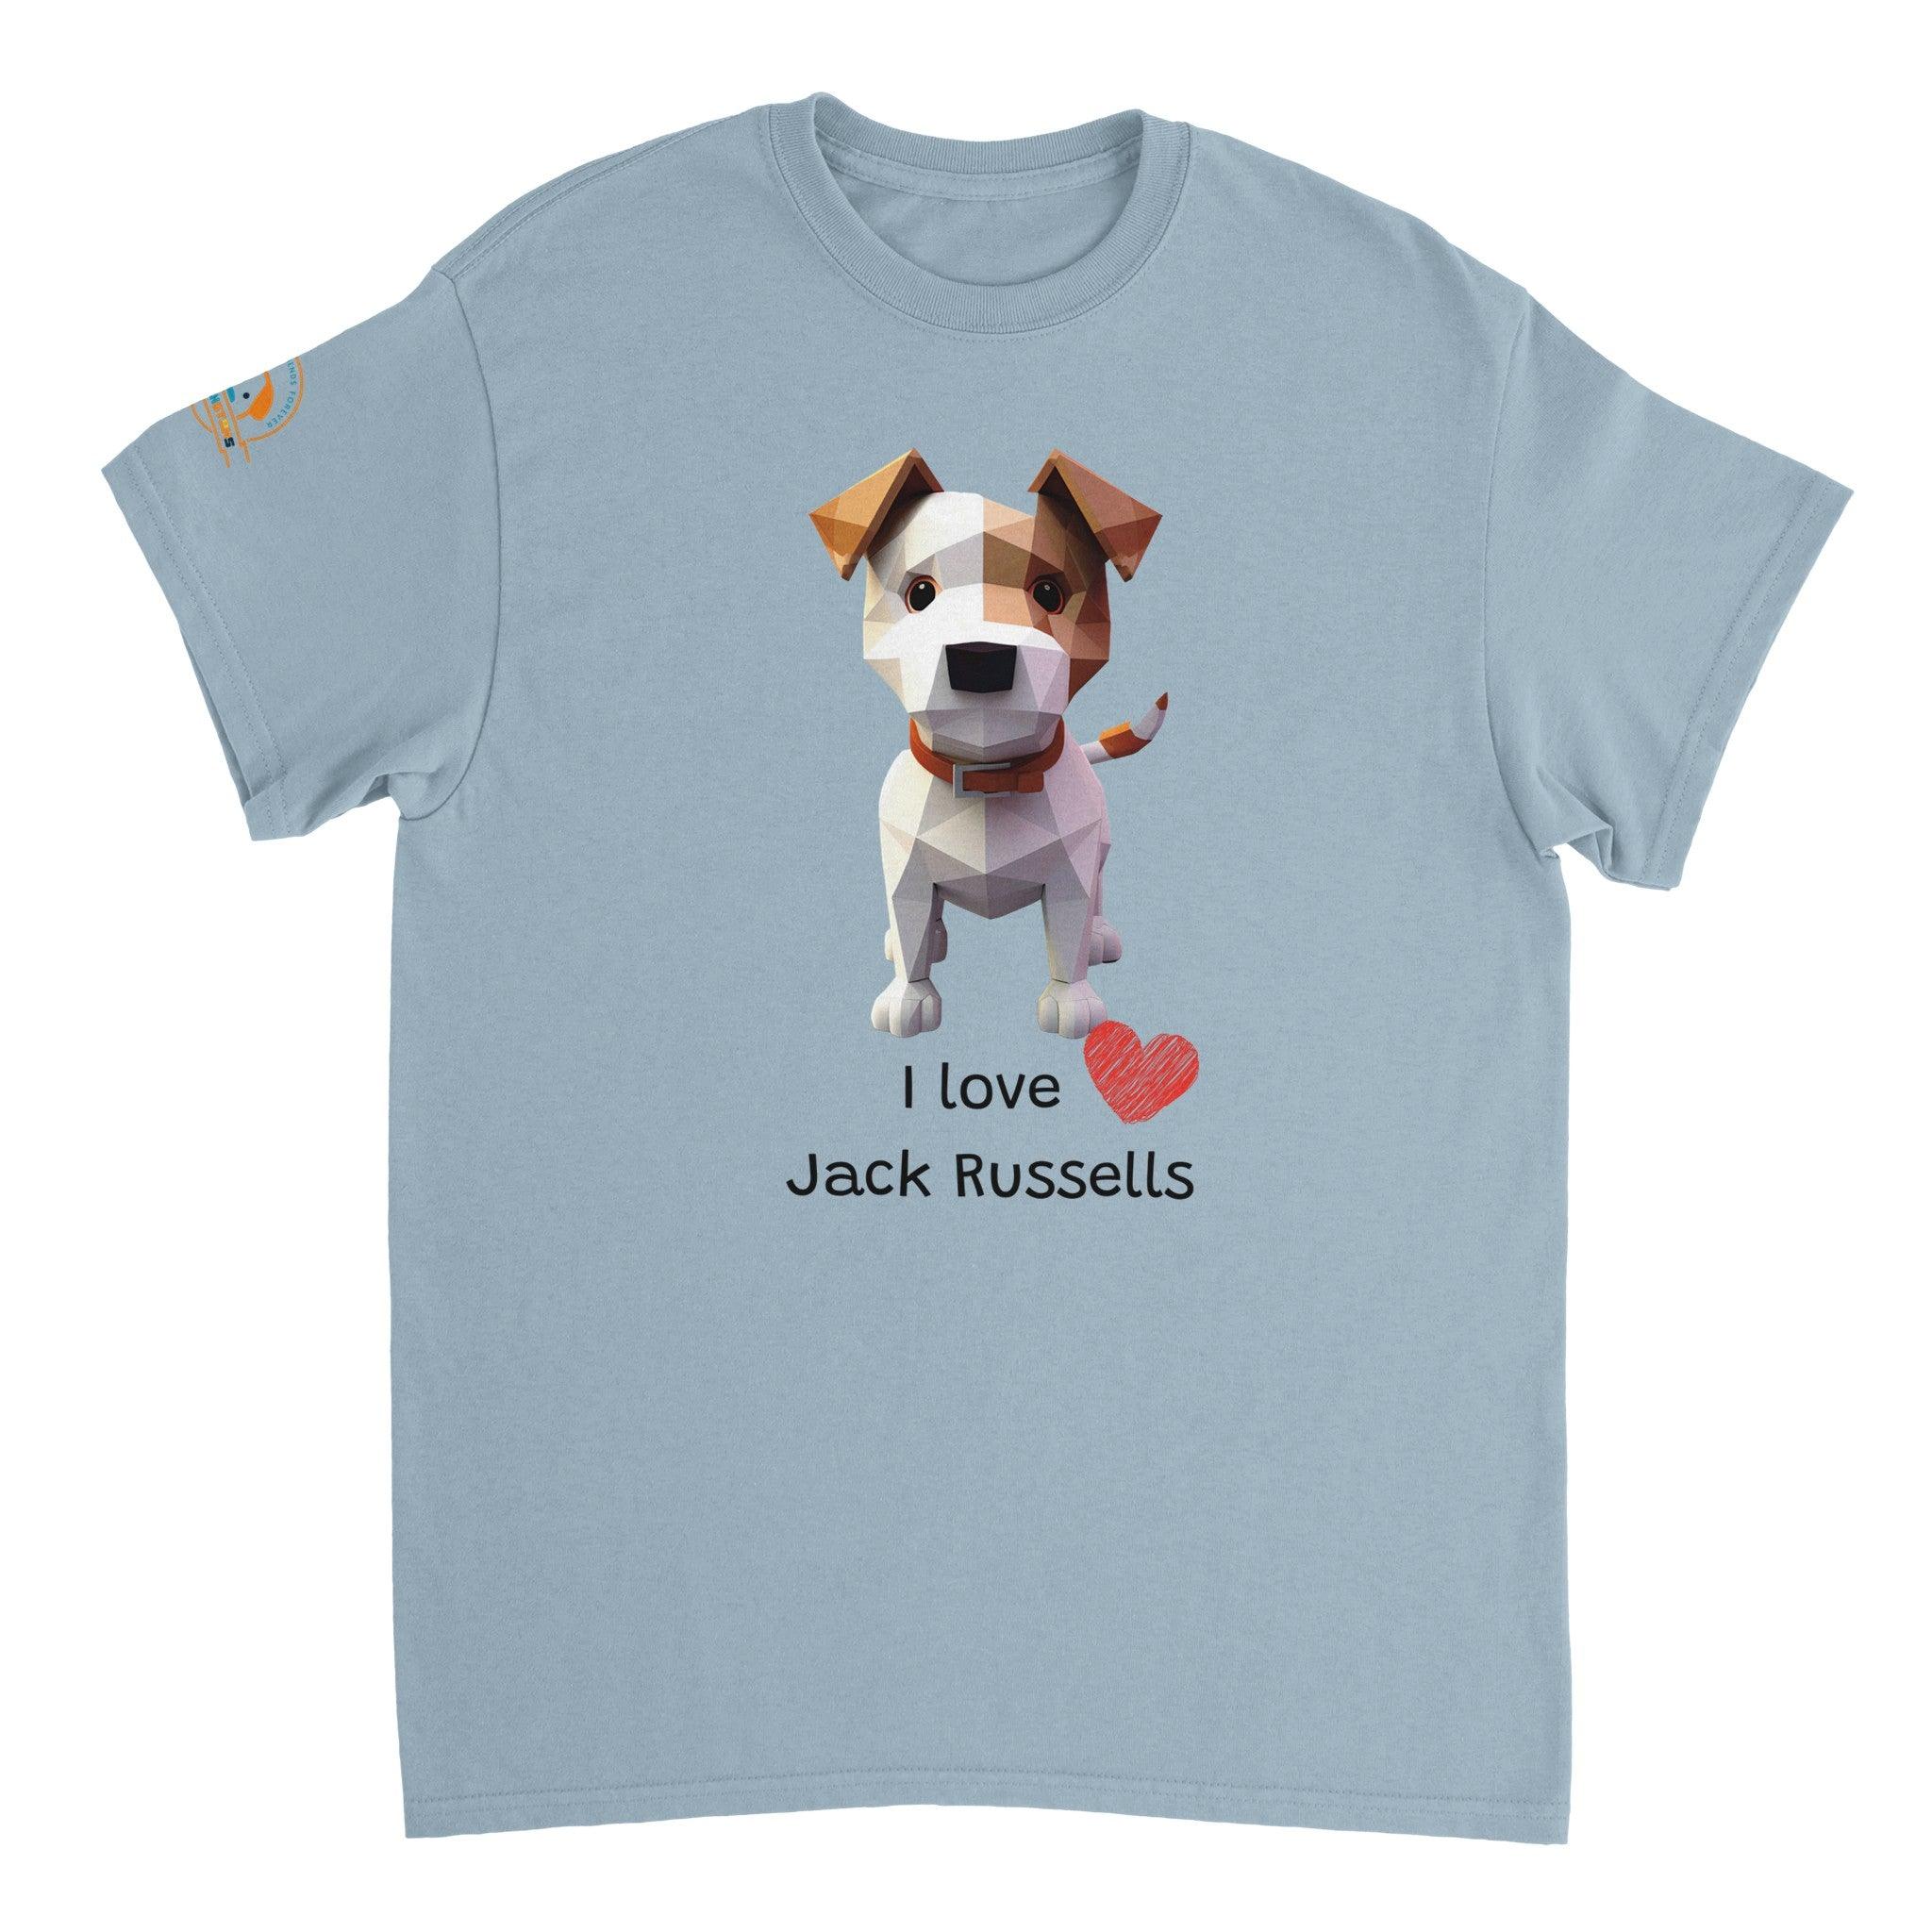 Polygon Pups: Jack Russels - Geometric Dog Breed T-Shirt - Woofingtons